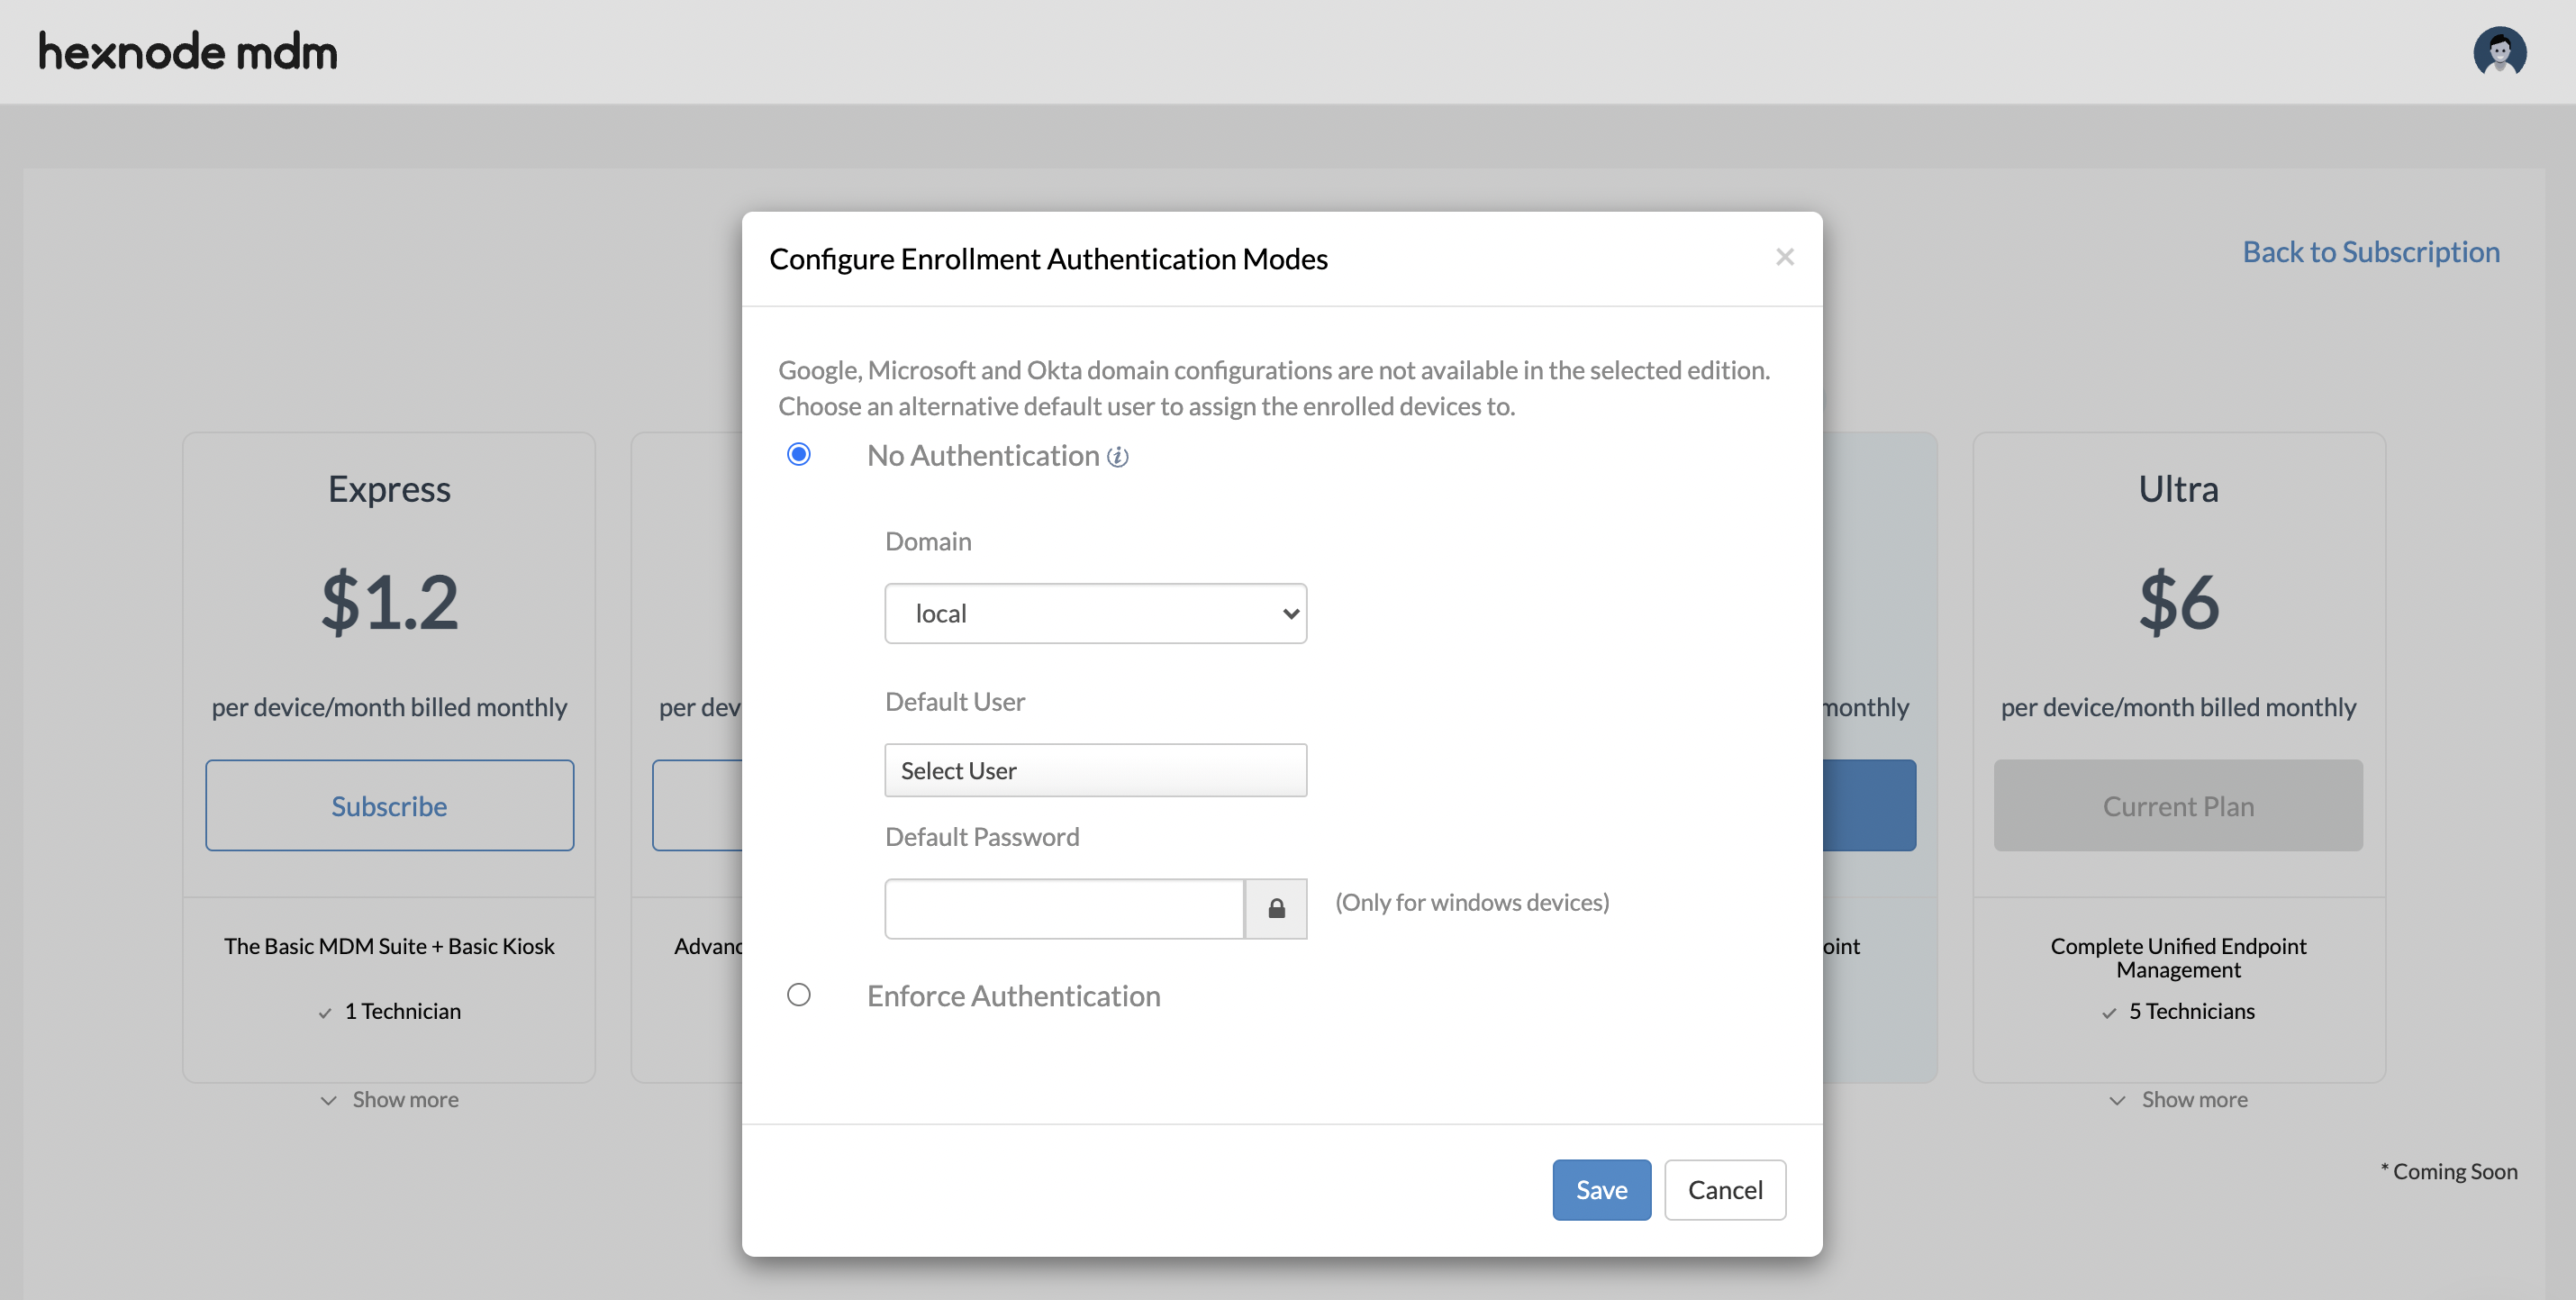 configure enrollment authentication mode while downgrading the license